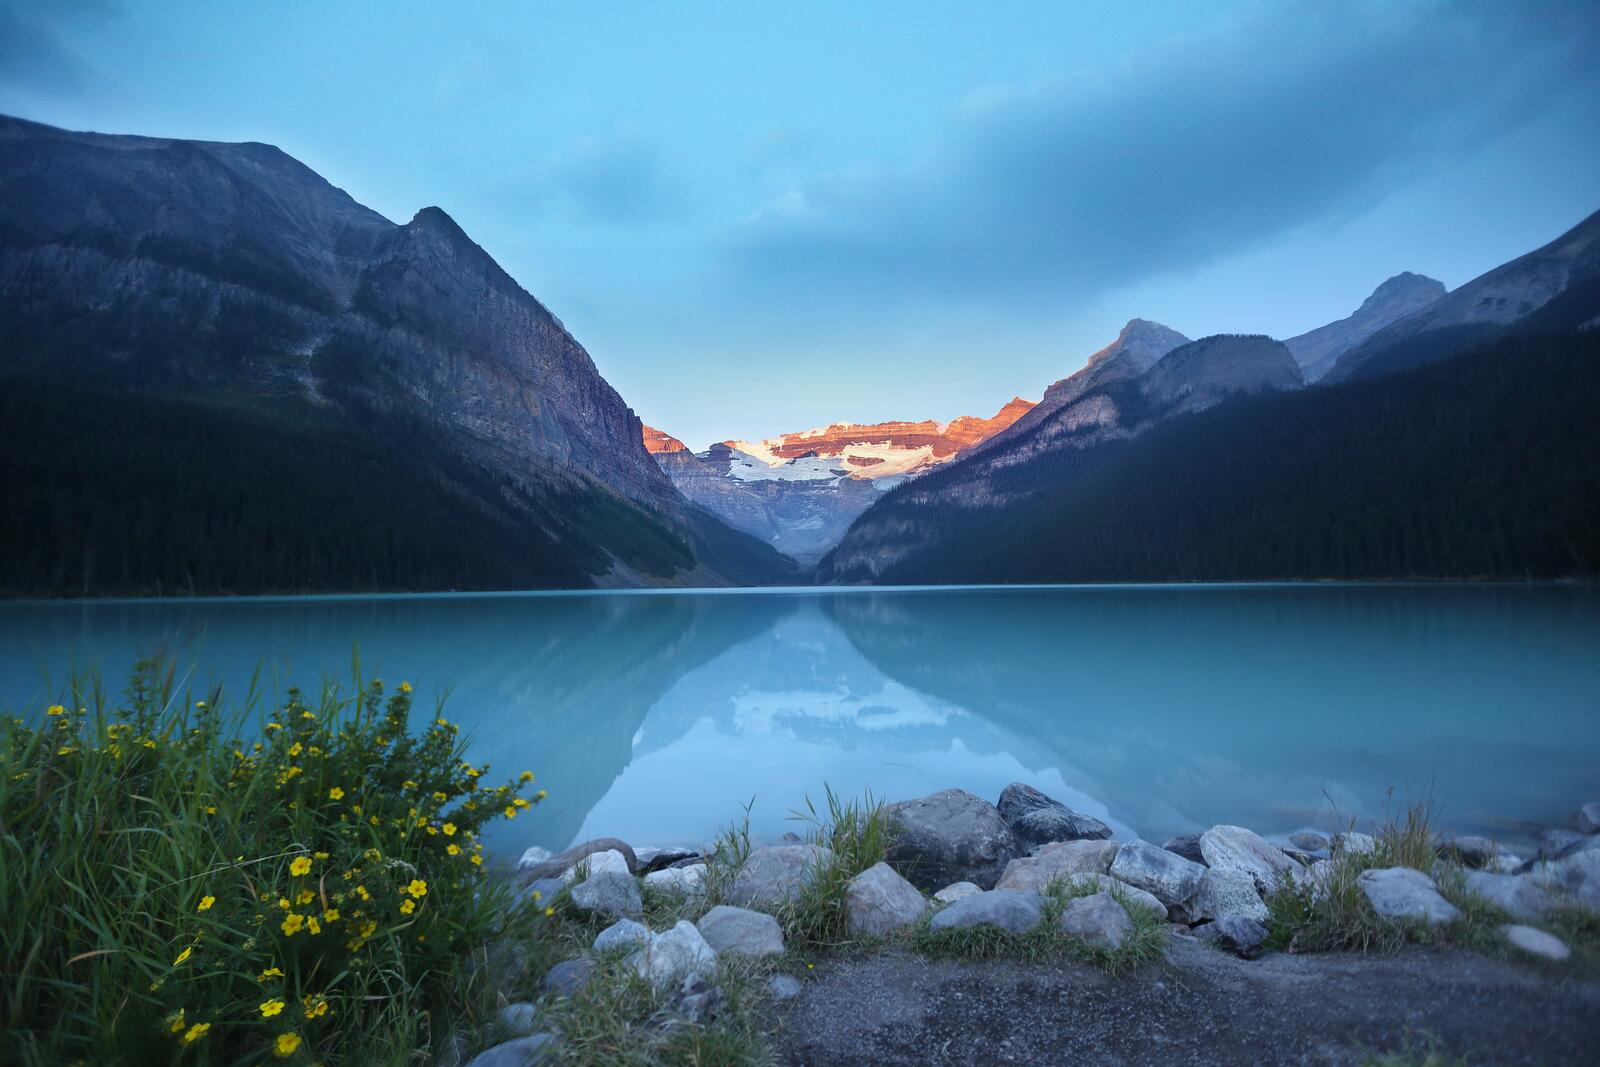 Бесплатное фото Голубое озеро в горах  на закате дня